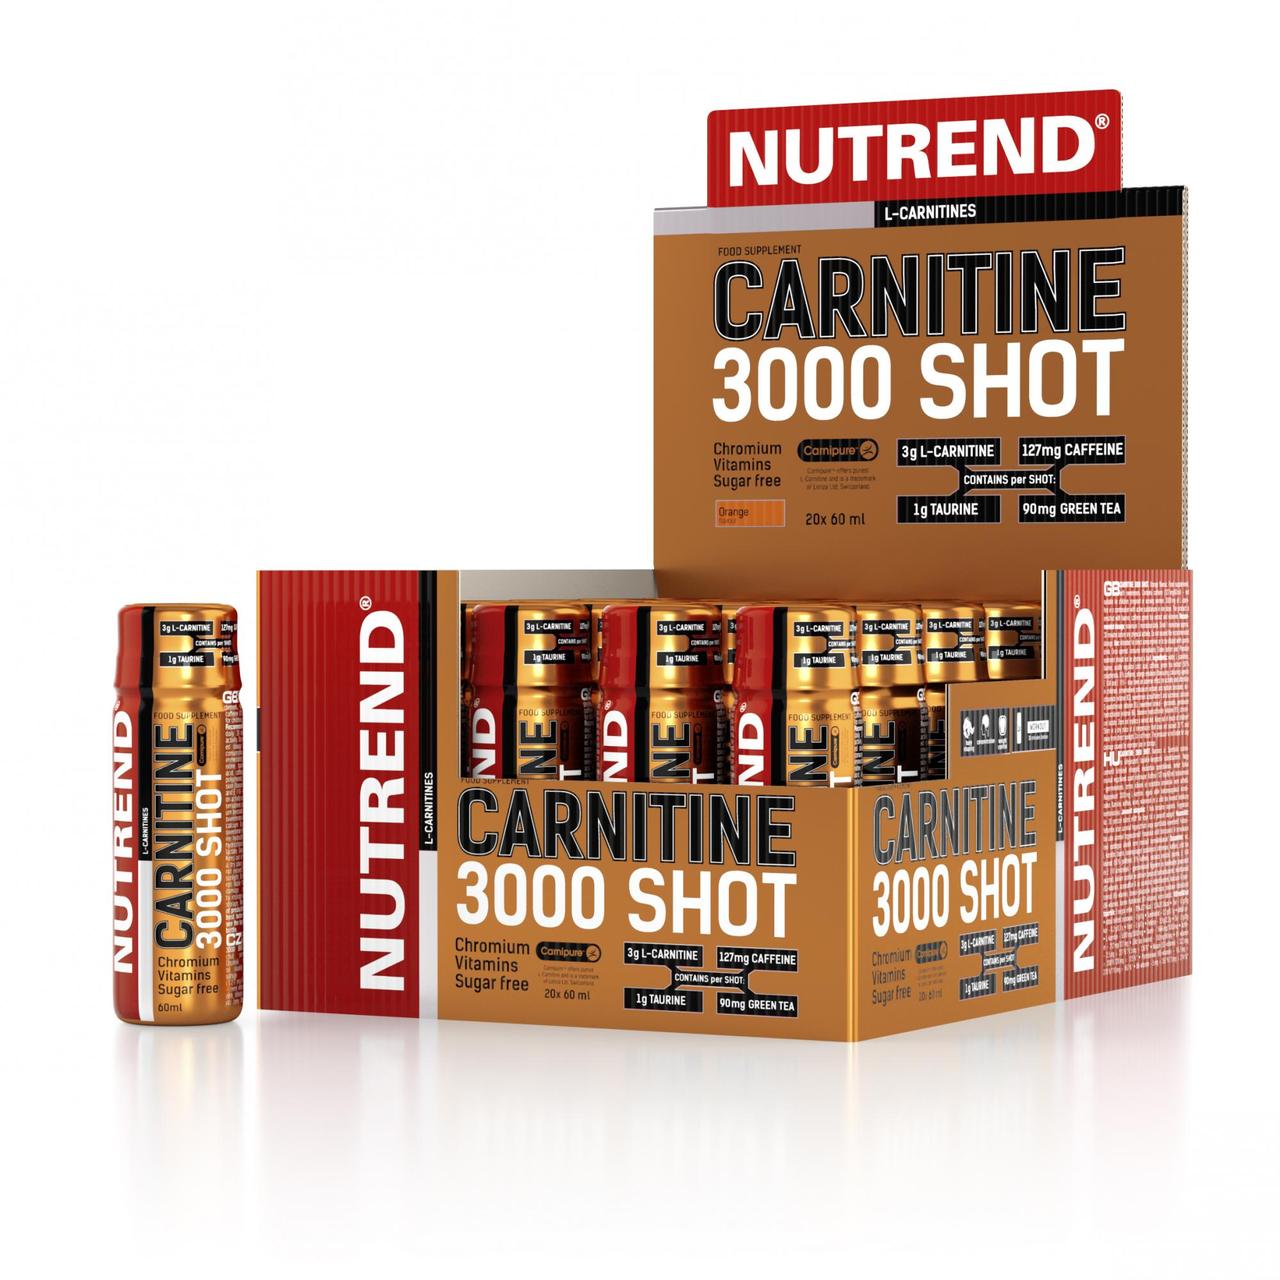 NUTREND Carnitine 3000 Shot 60 мл